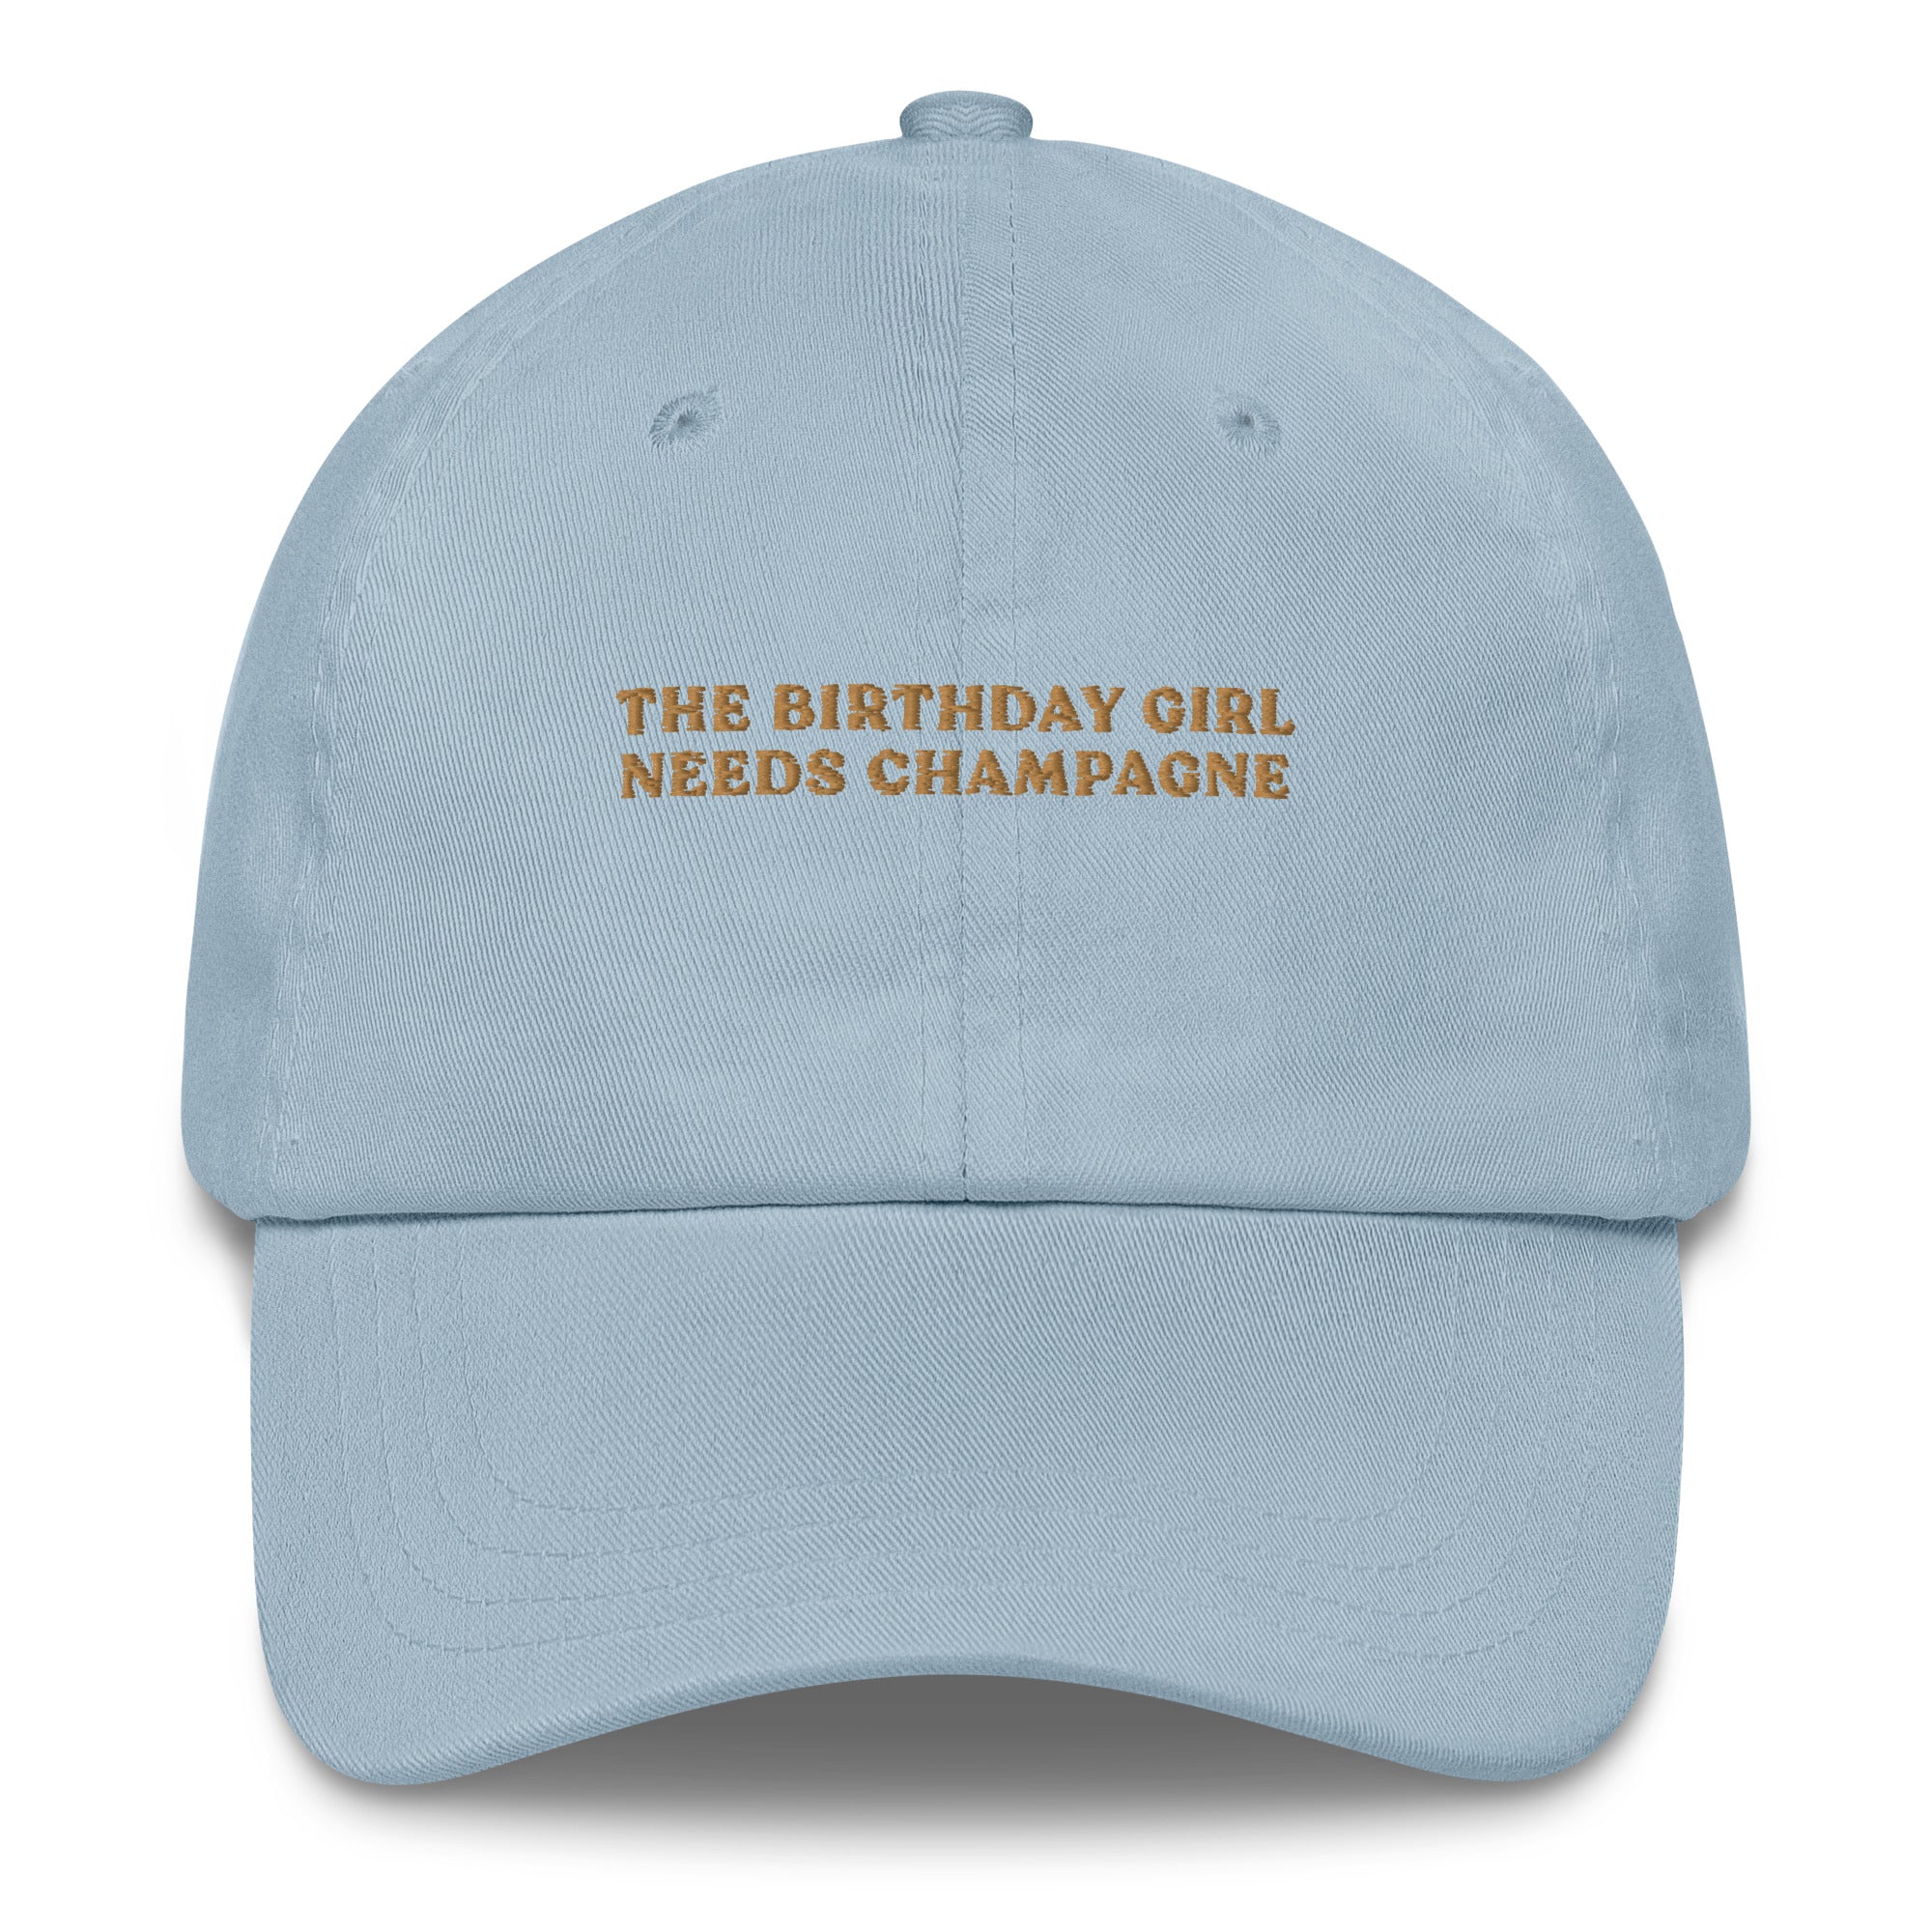 The Birthday Girl needs Champagne - Cap